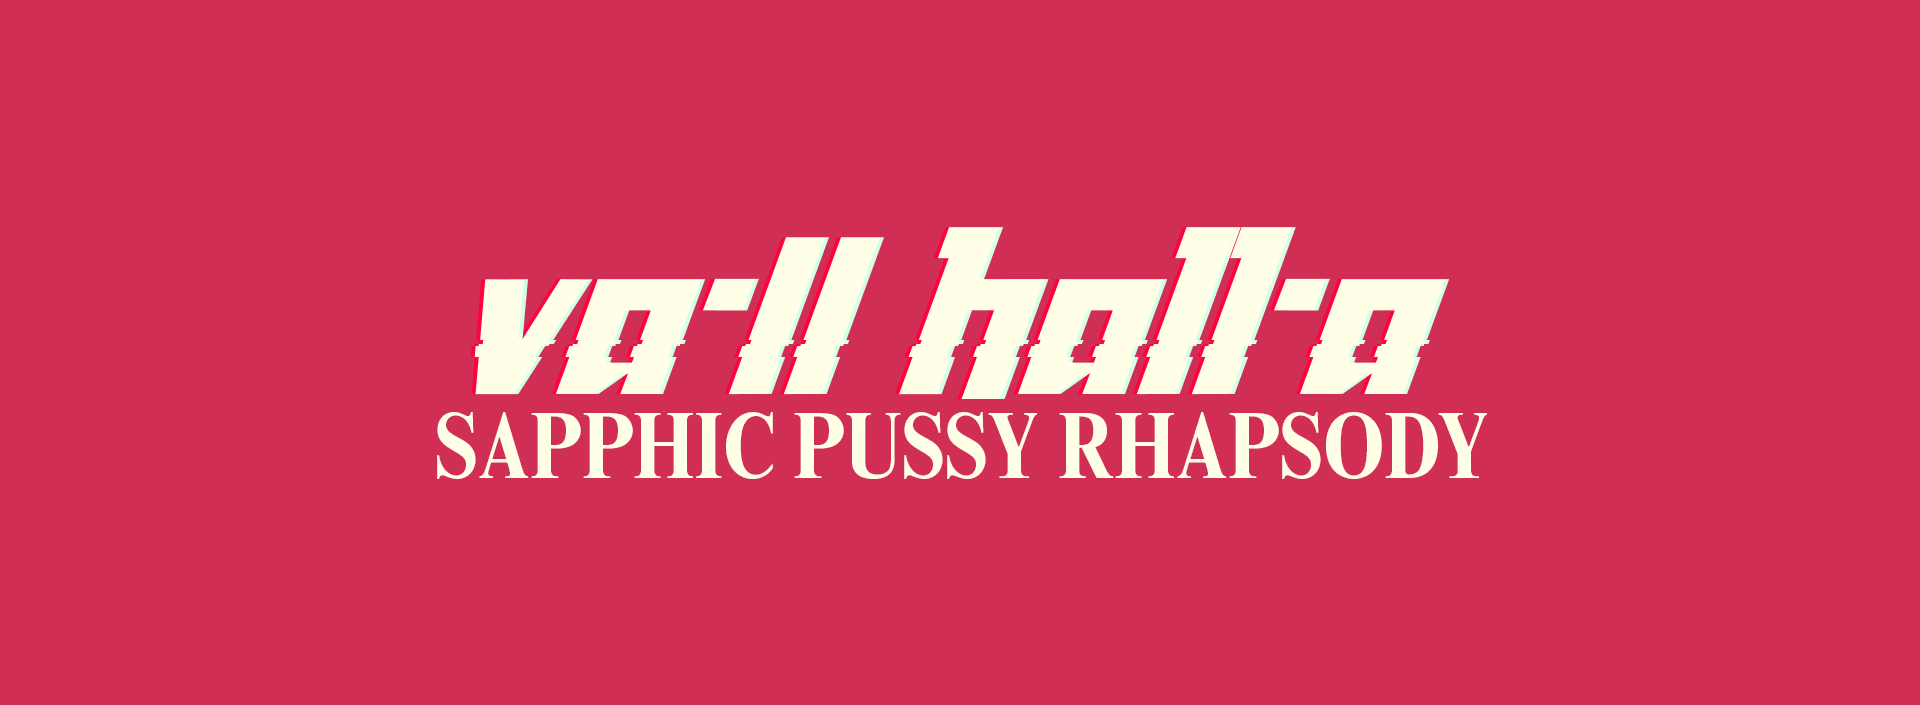 VA-11 Hall-A: Sapphic Pussy Rhapsody